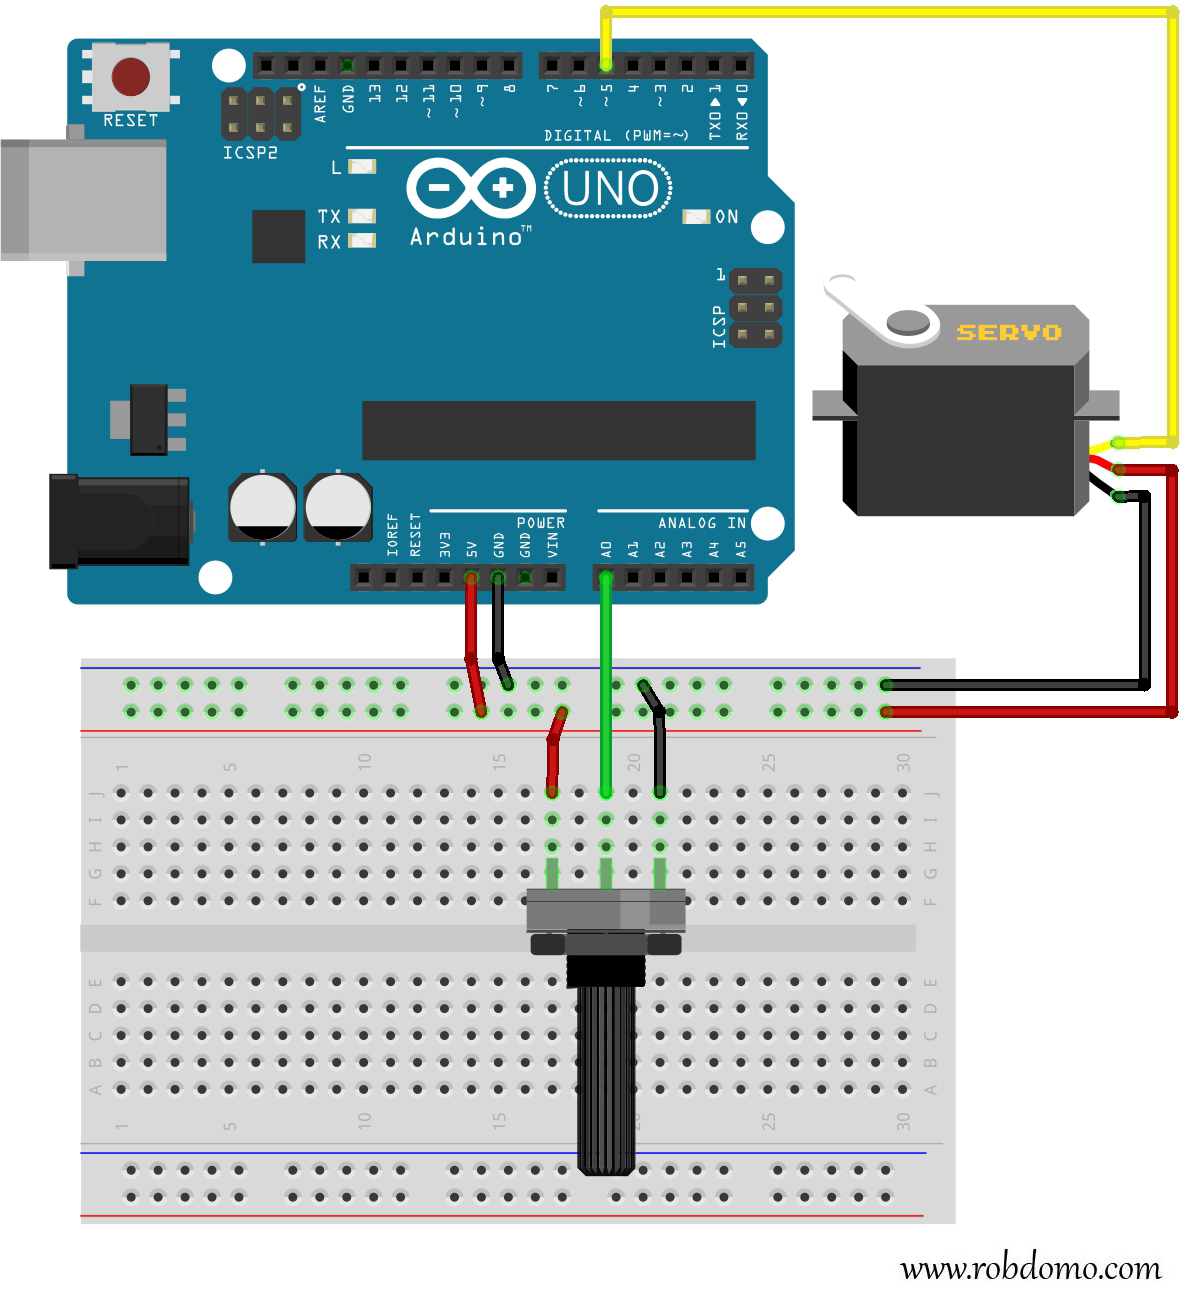 Contrôler un servomoteur avec une carte Arduino / Genuino